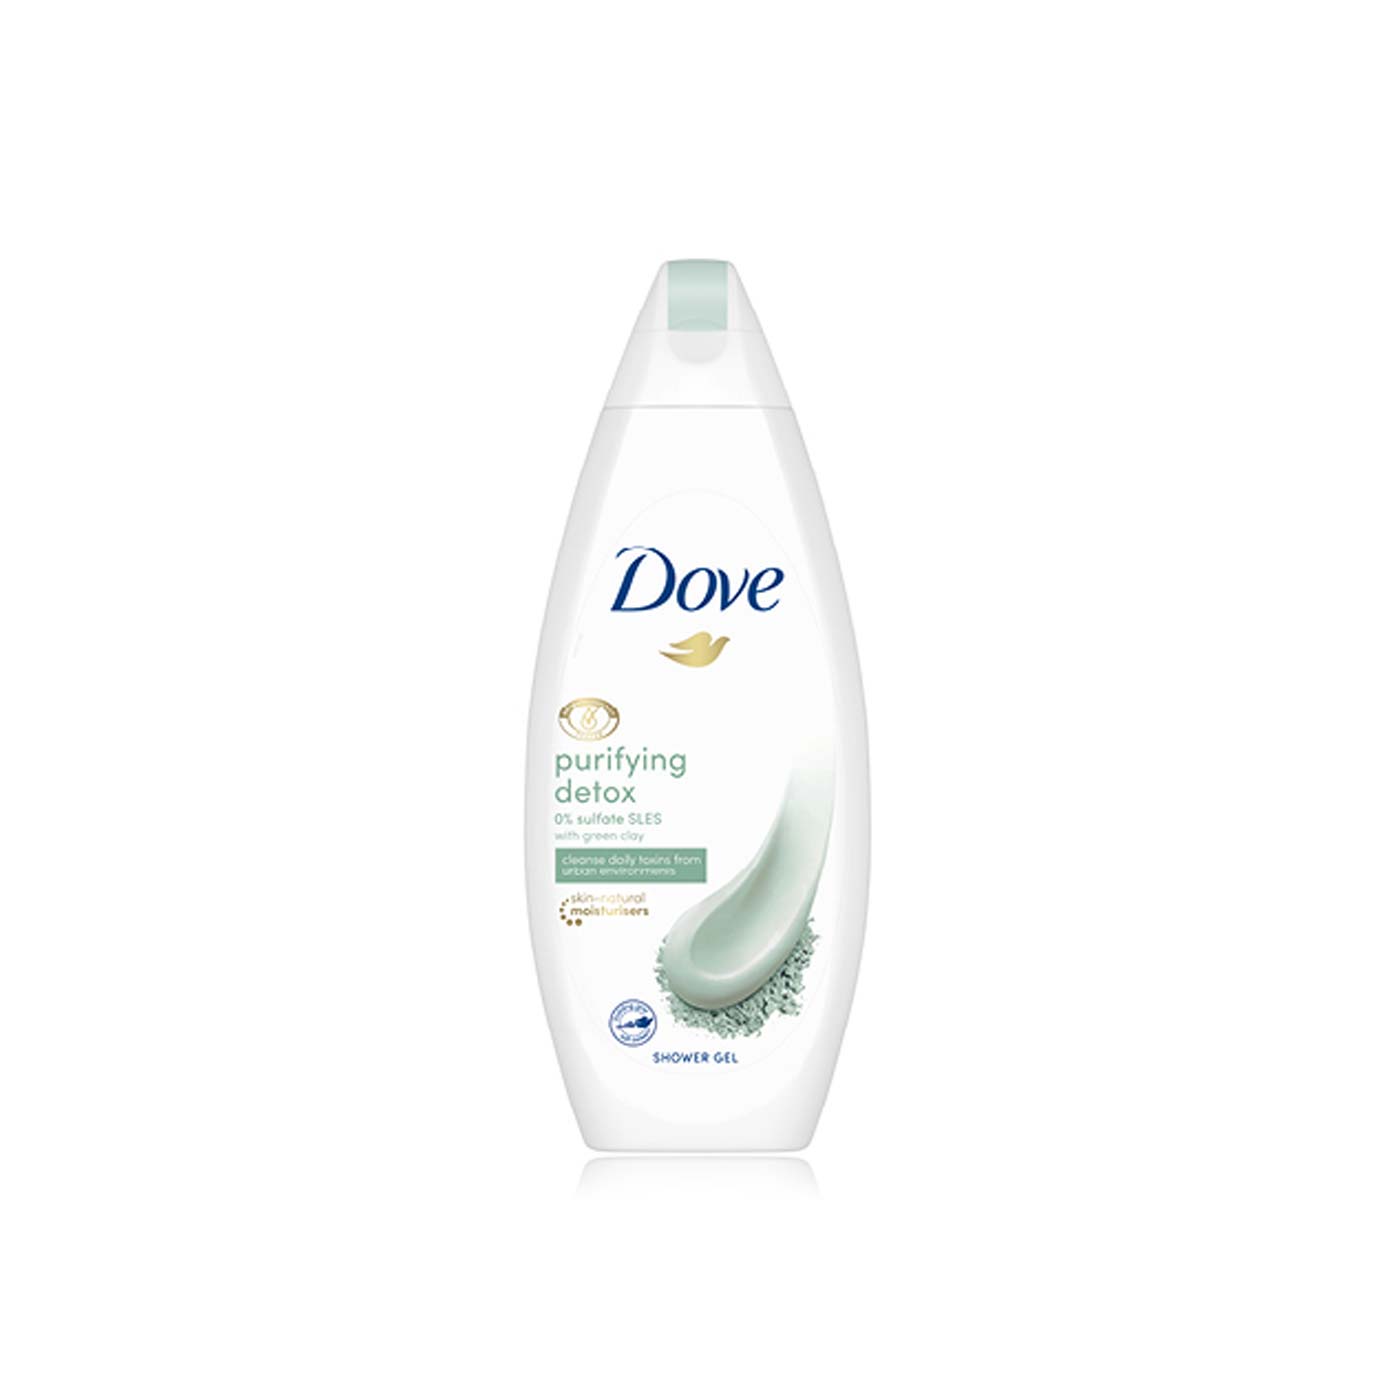 Dove purifying detox green clay shower gel 500ml - Spinneys UAE